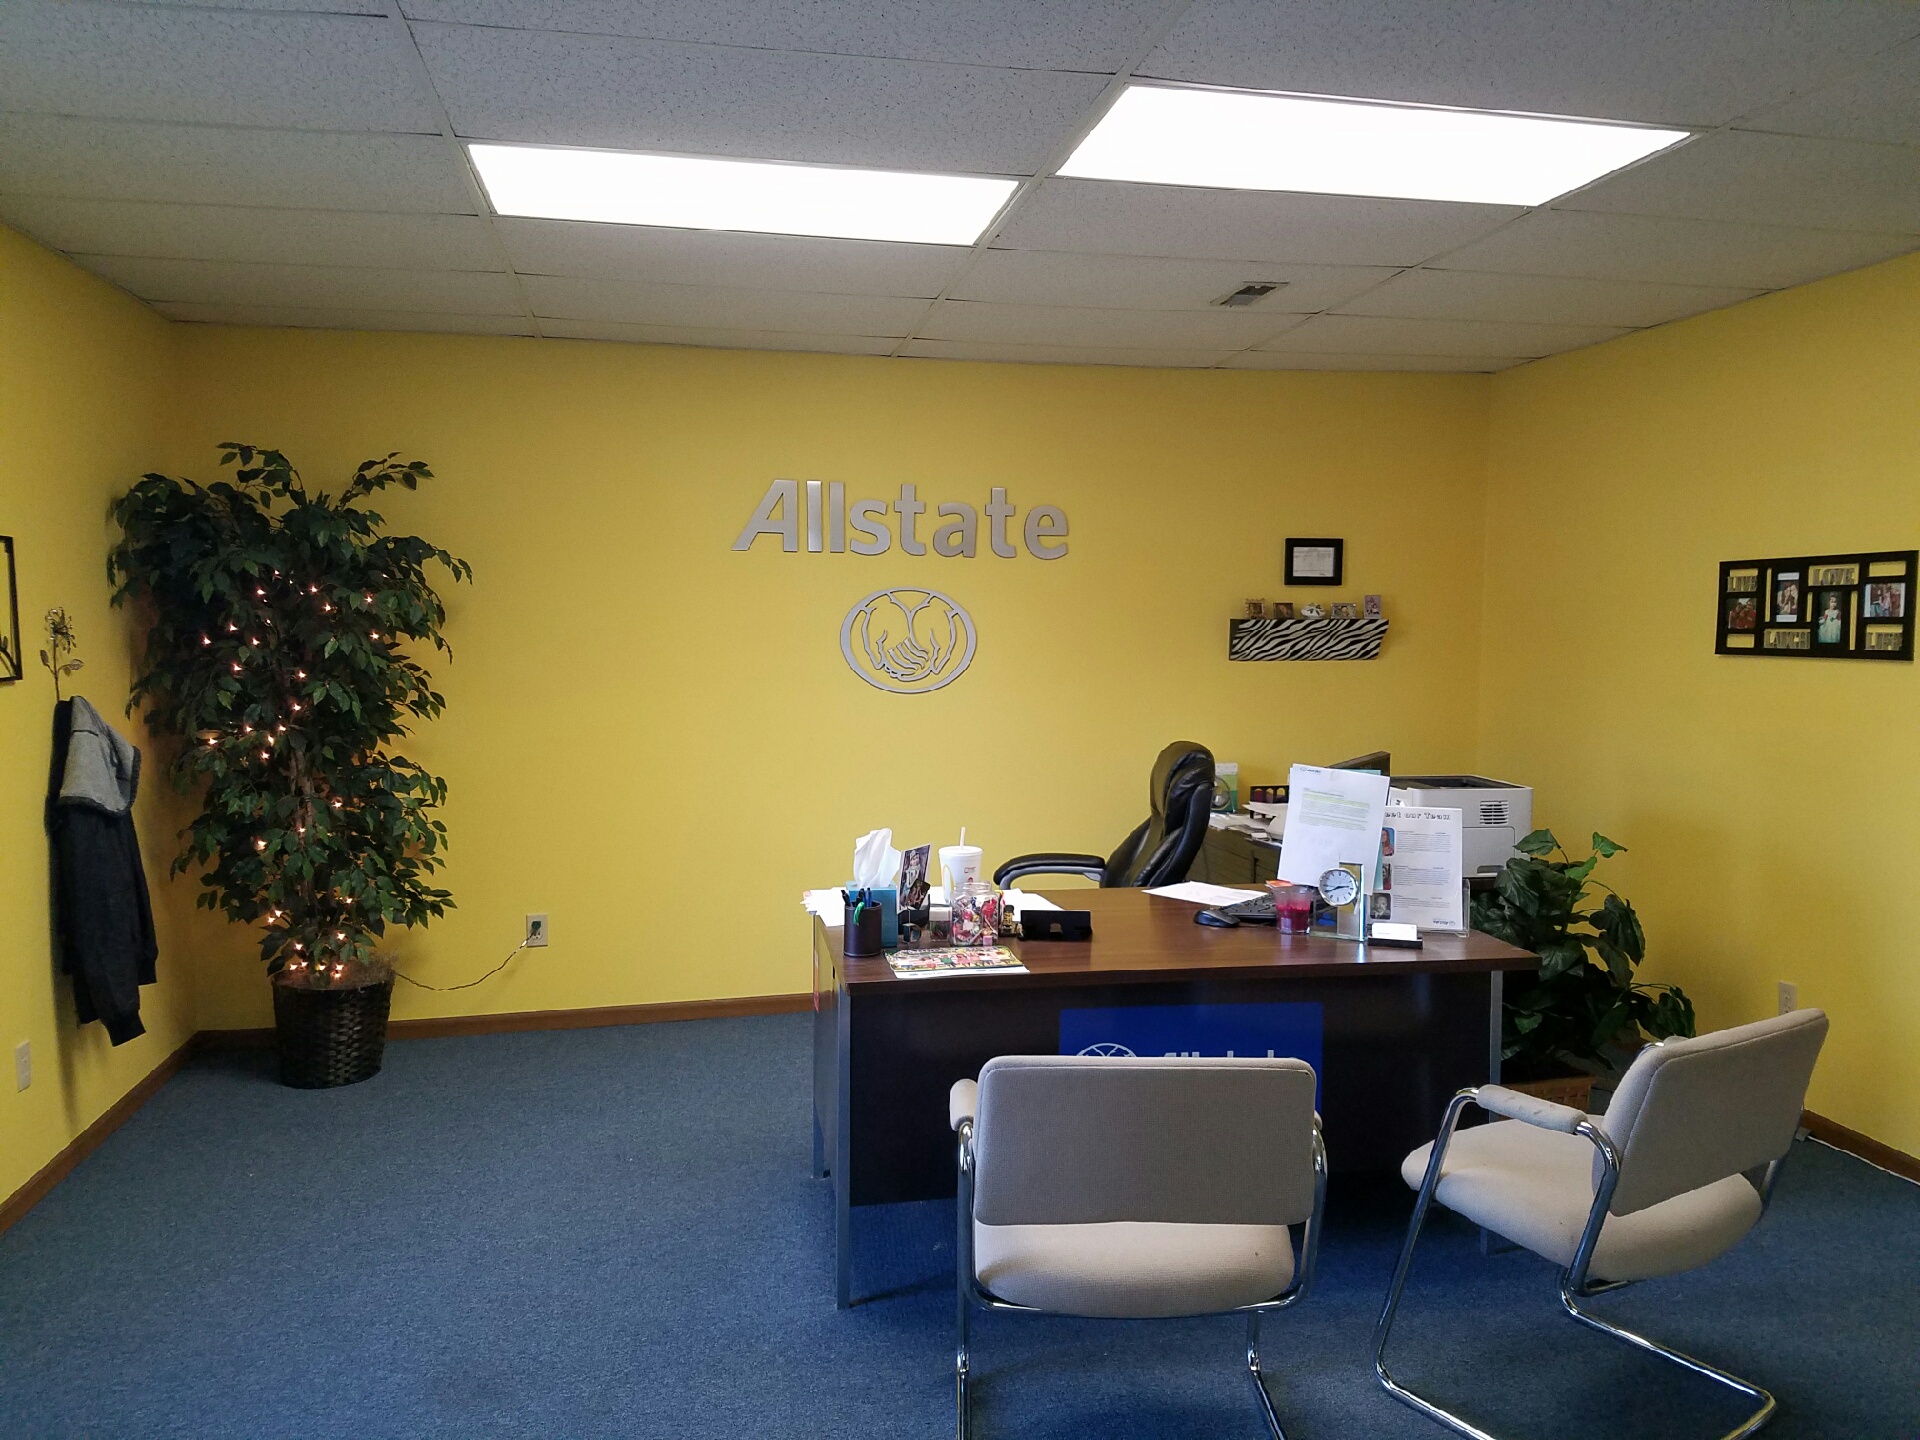 Jessica Harrison-Wilkins: Allstate Insurance Photo